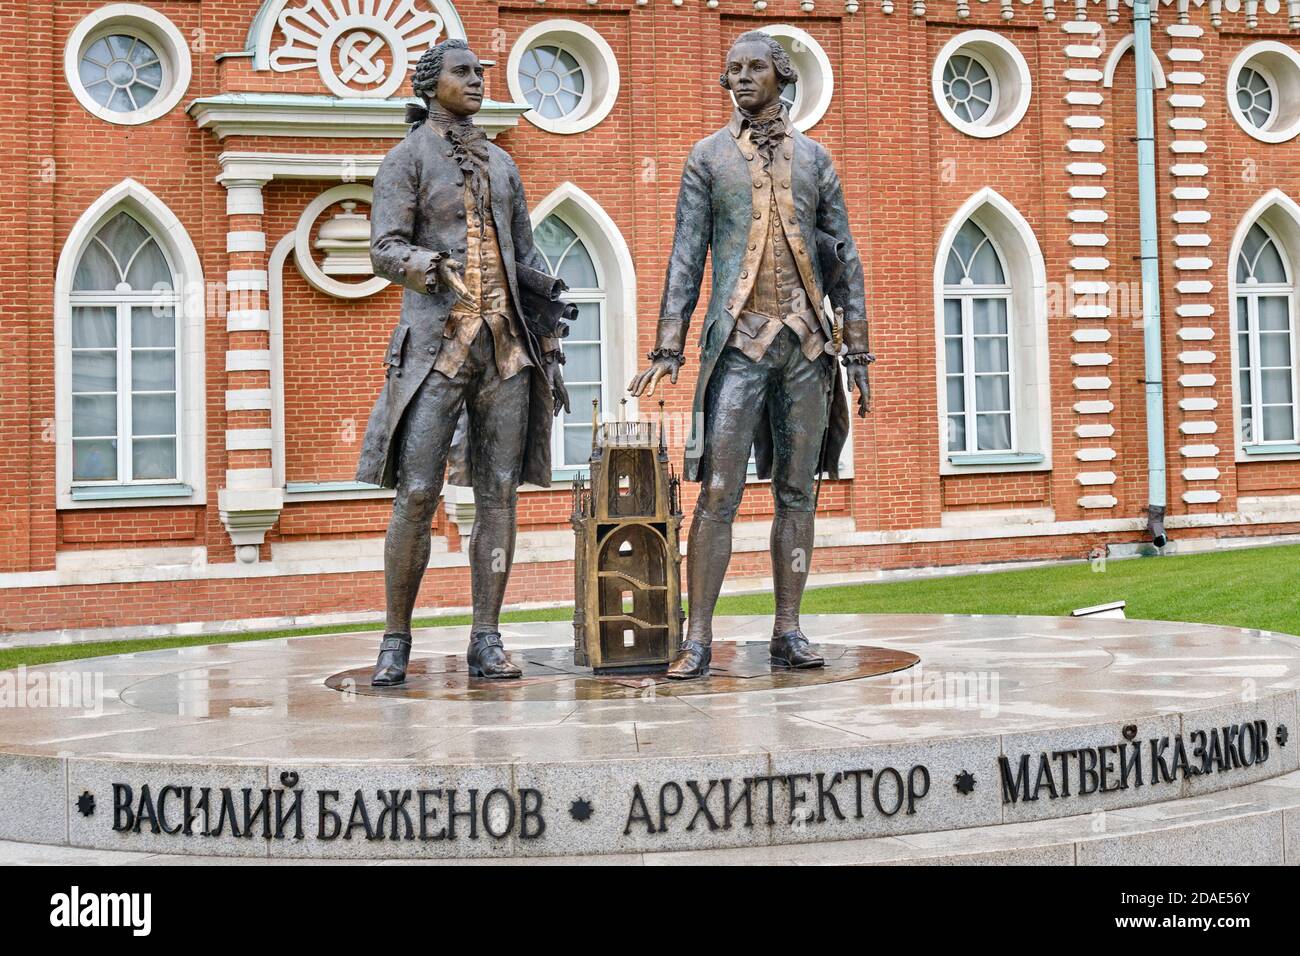 Monument to the architects - Vasily Bazhenov and Matthew Kazakov in Tsaritsino park. Moscow, Russia, 08 05 2019 Stock Photo